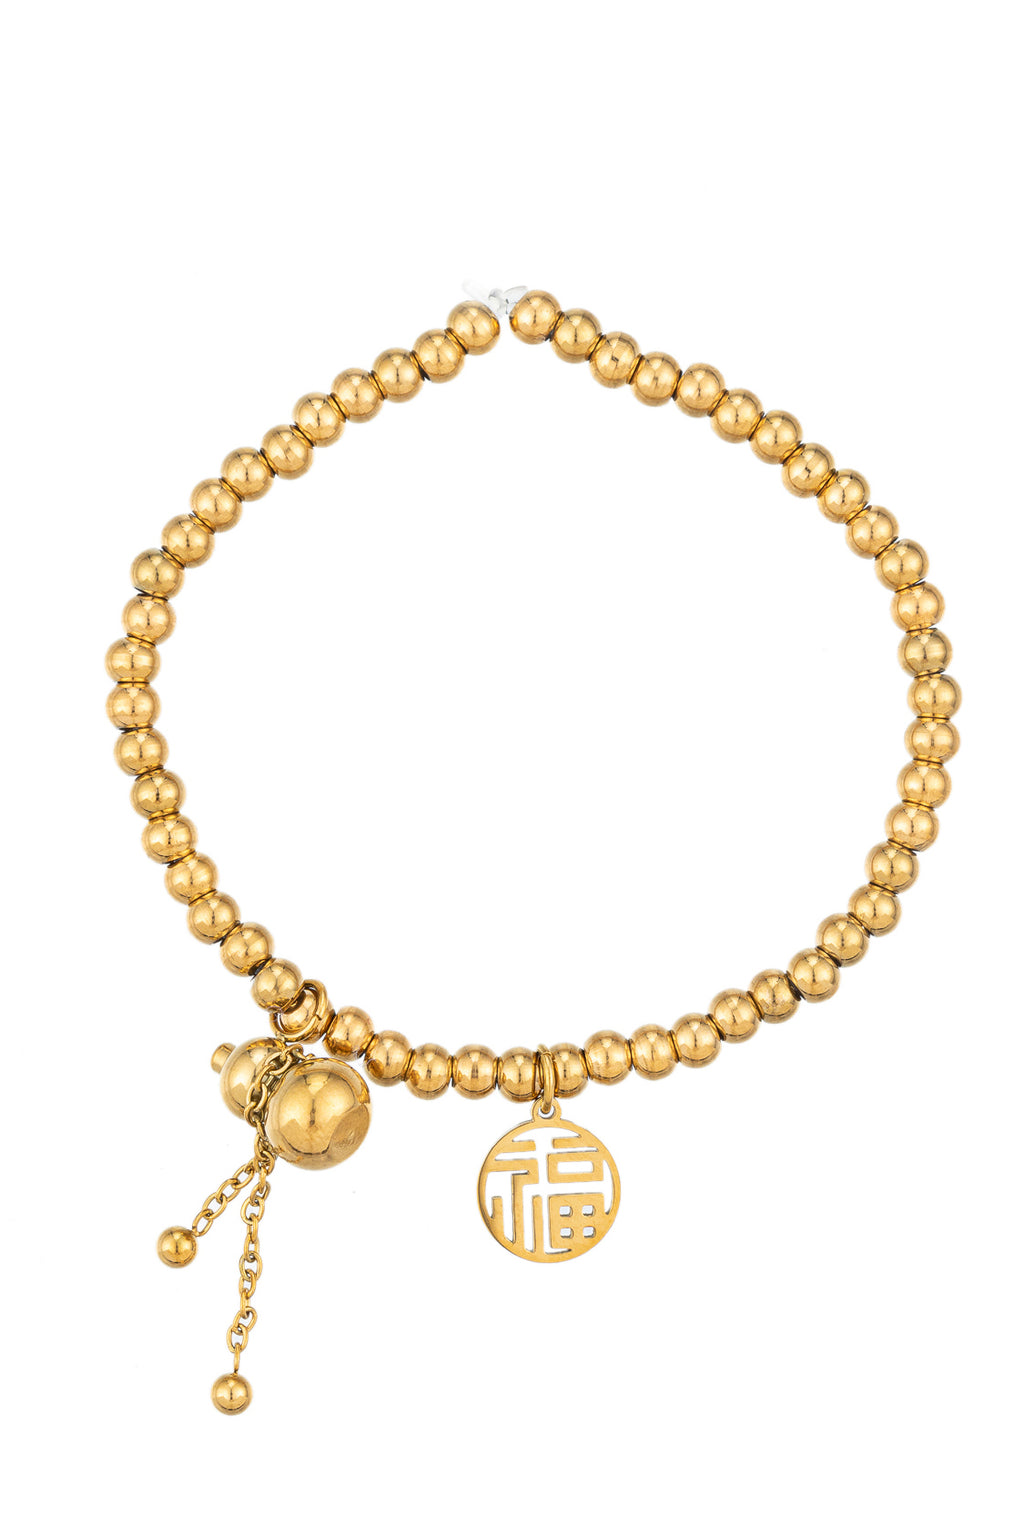 Gold tone titanium beaded bracelet with gold pendants.